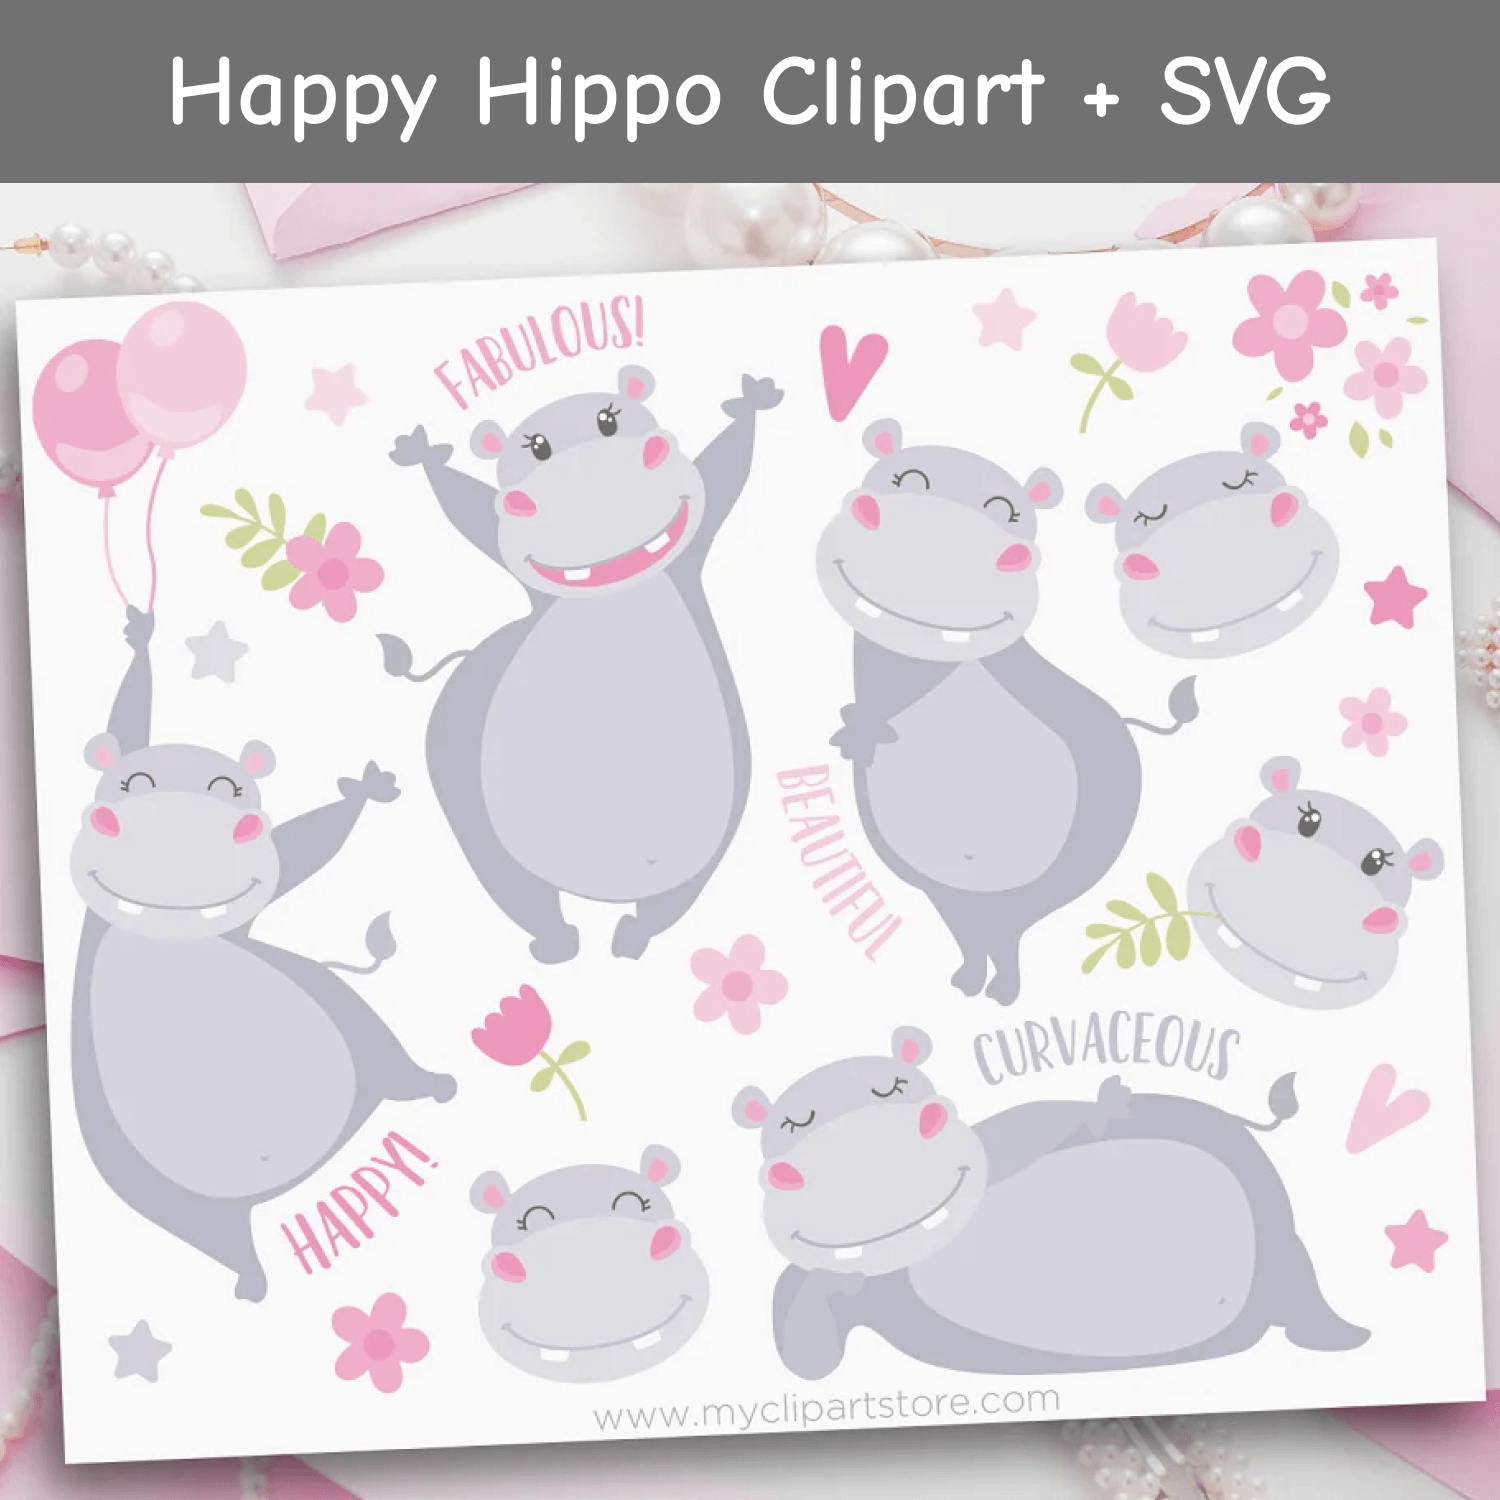 Happy hippo clipart svg.